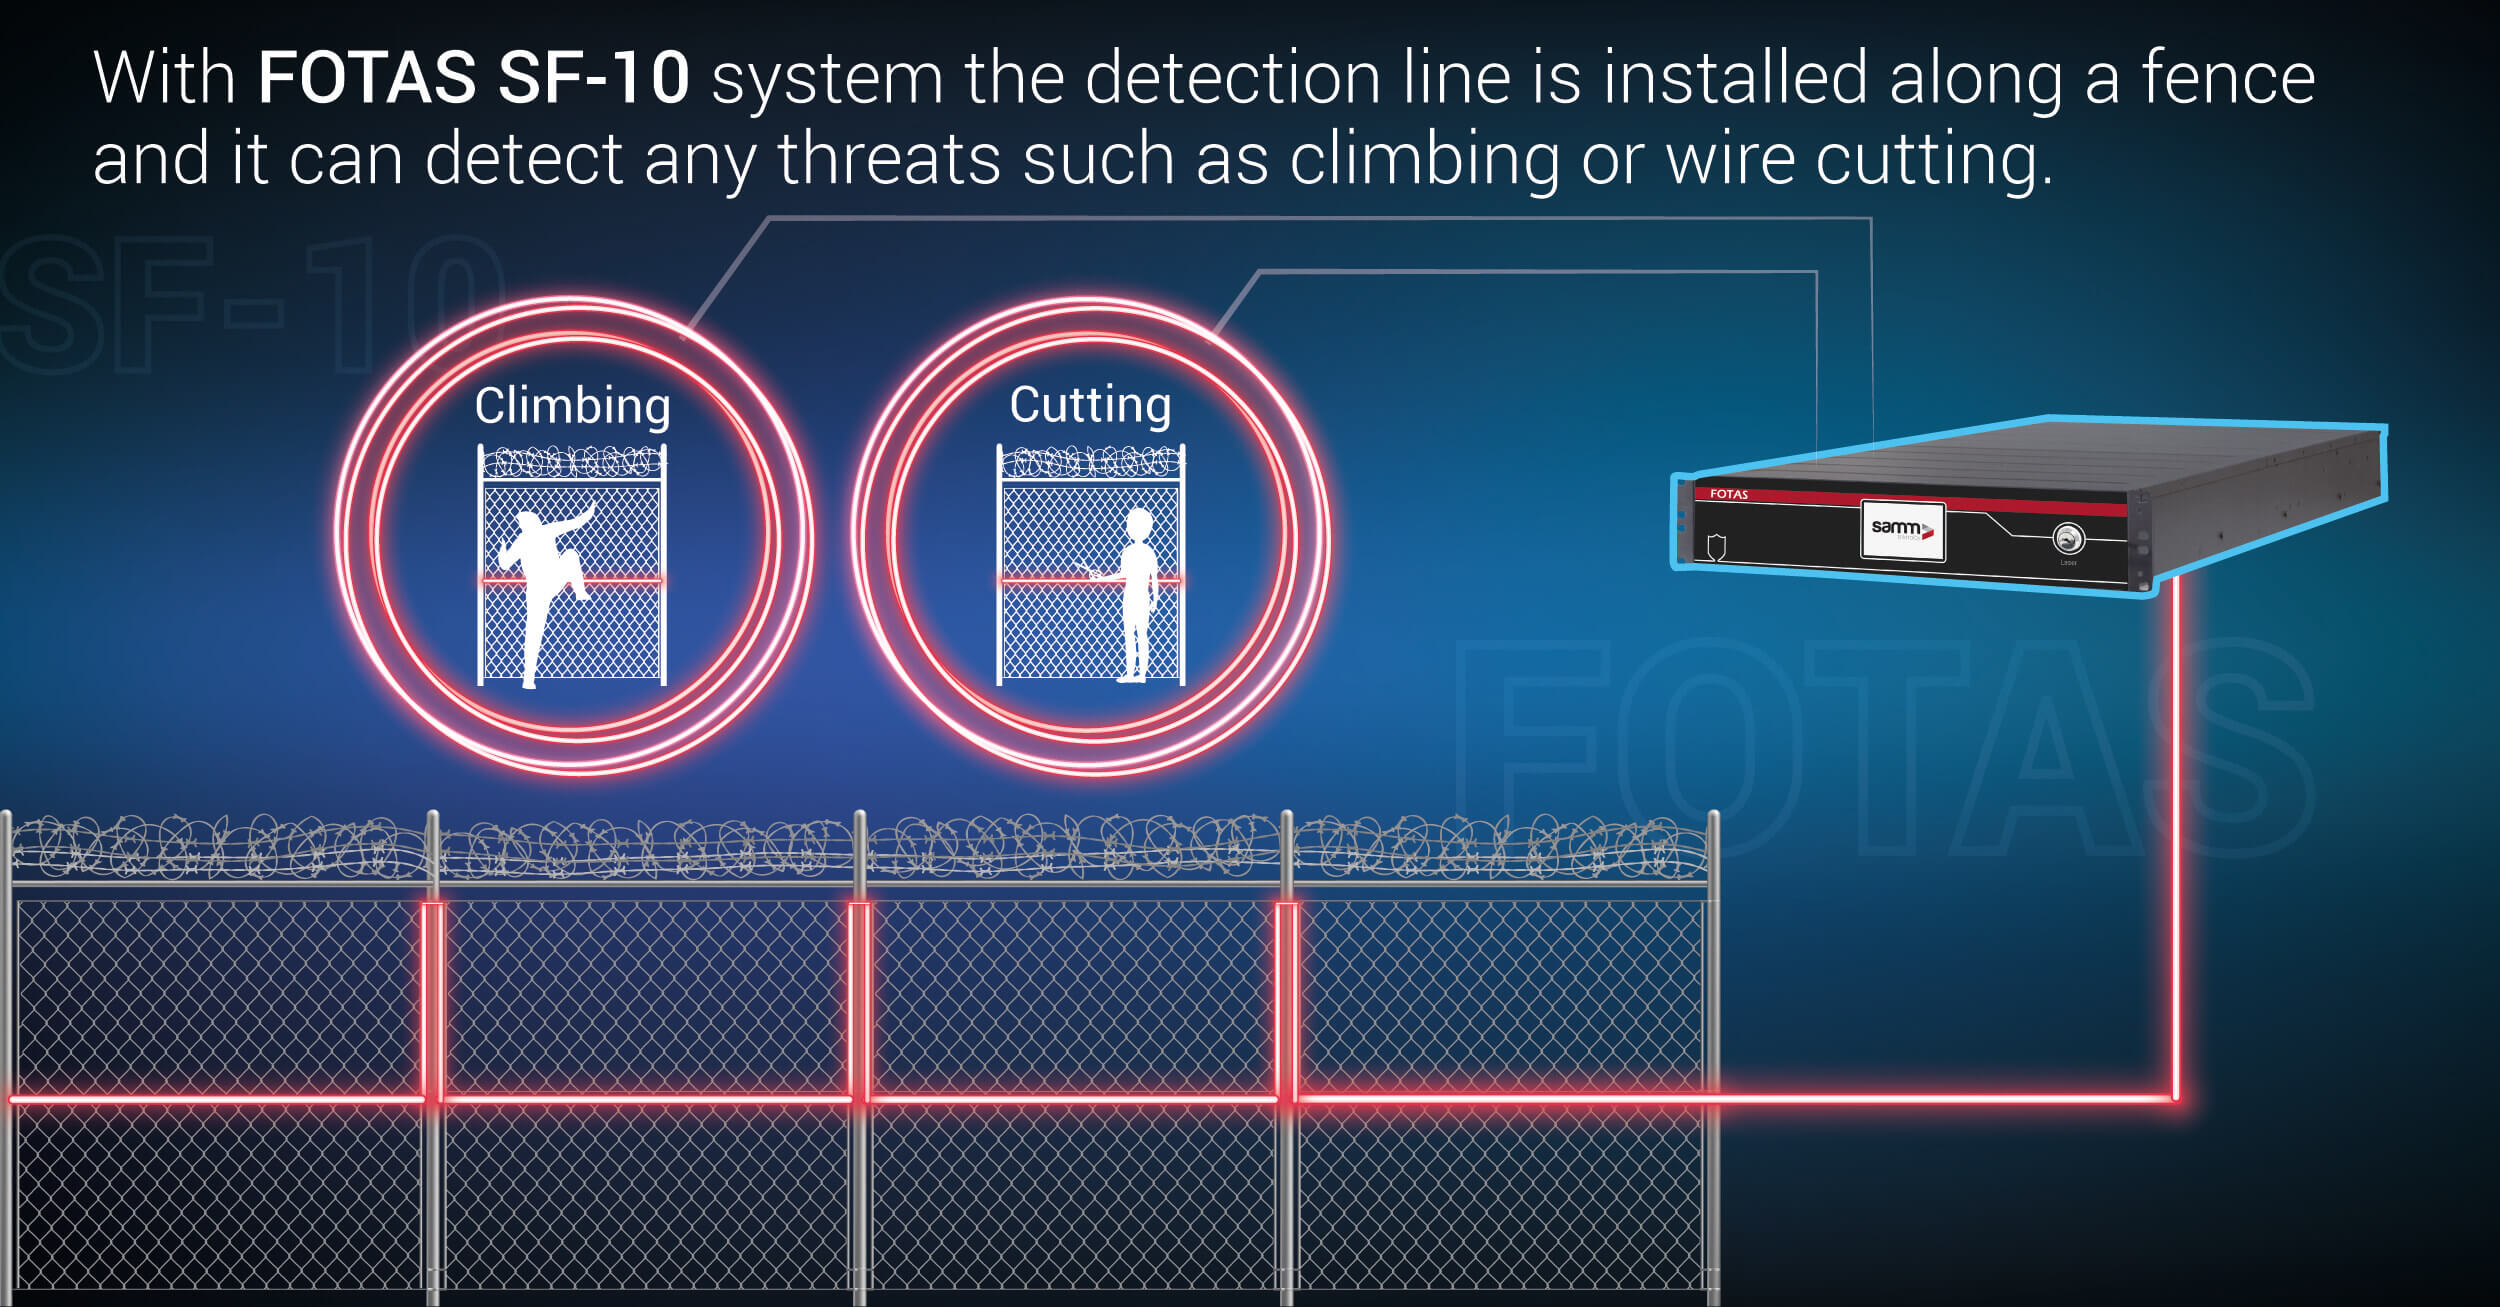 Fiber optic detection system SF-10 | Samm Teknoloji